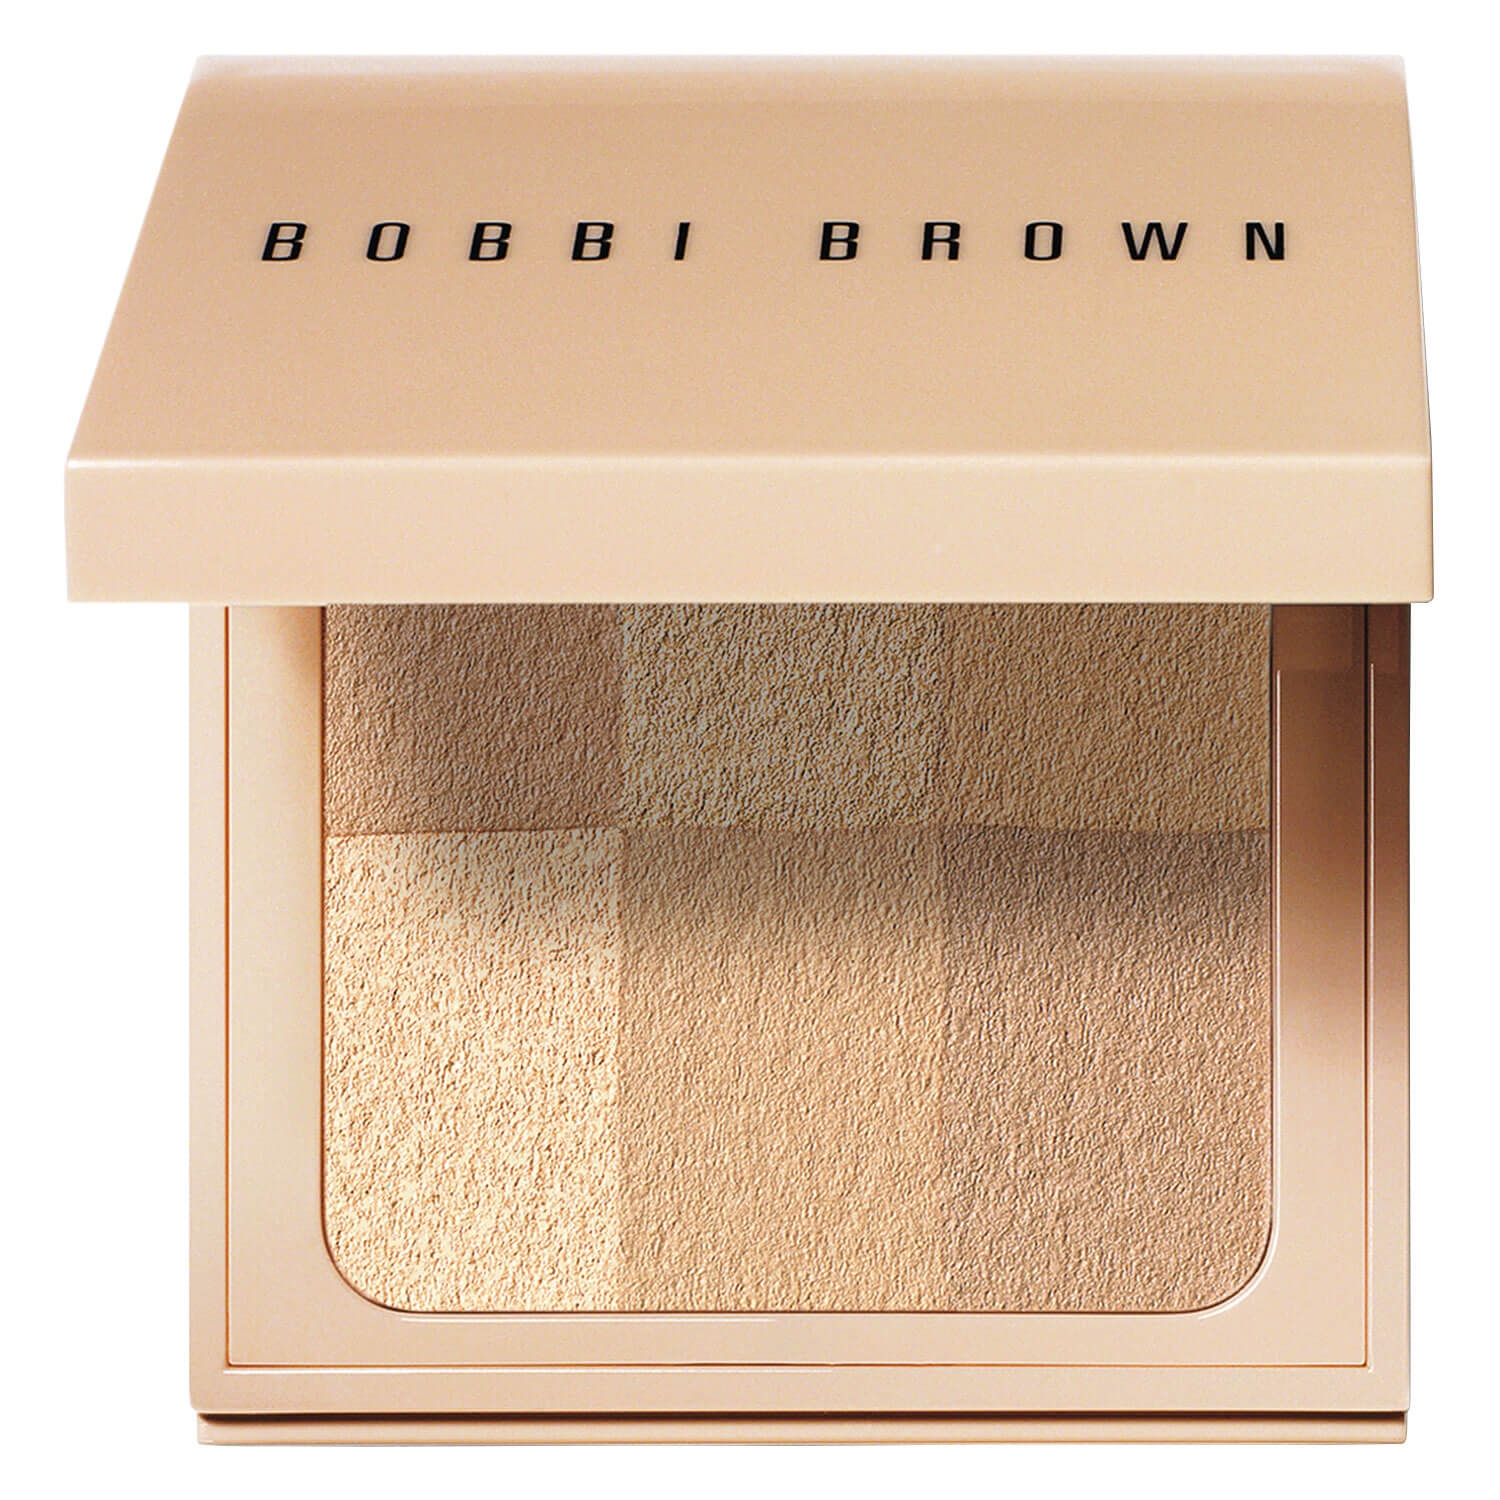 Product image from BB Powder - Nude Finish Illuminating Powder Nude